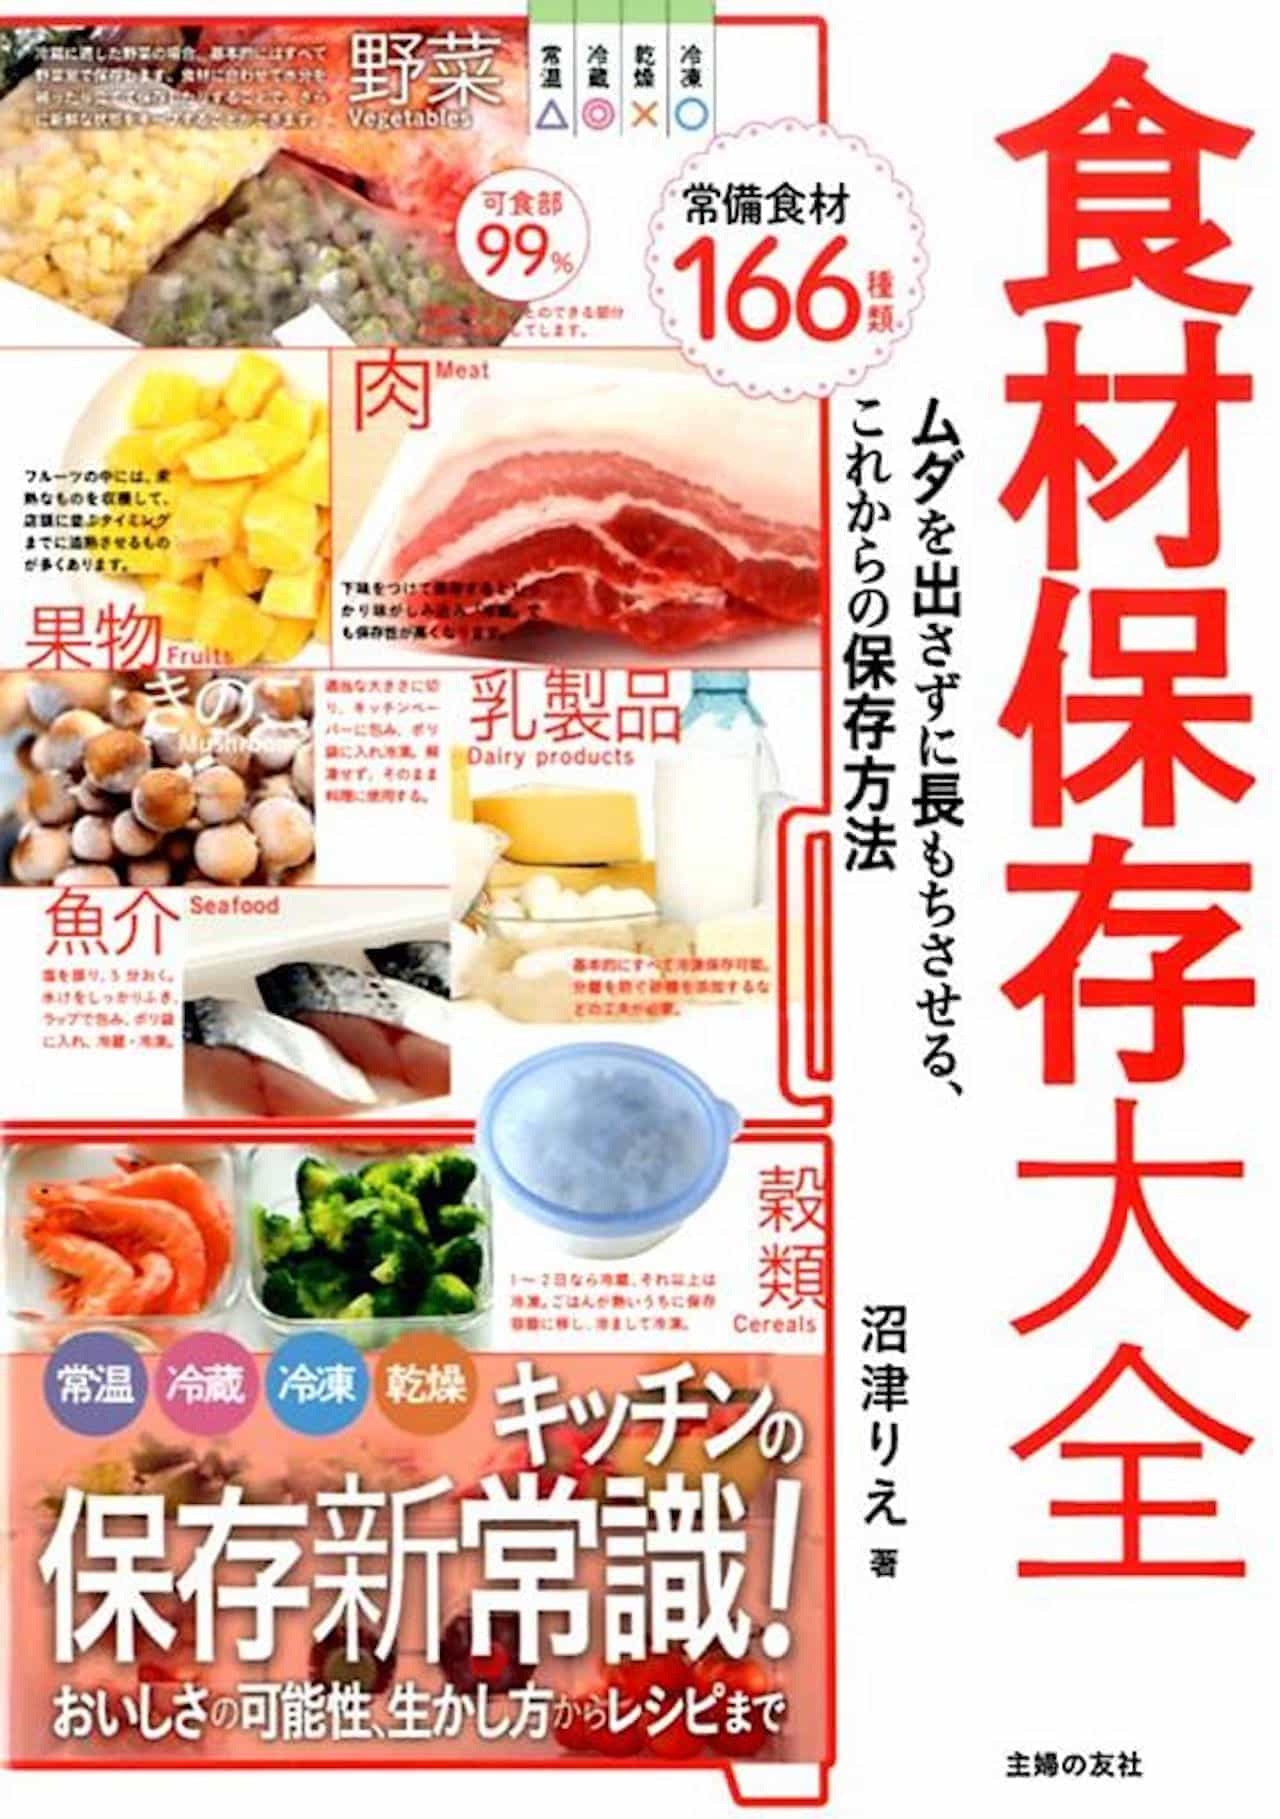 SHUFUNOTOMO "Food Preservation Encyclopedia"